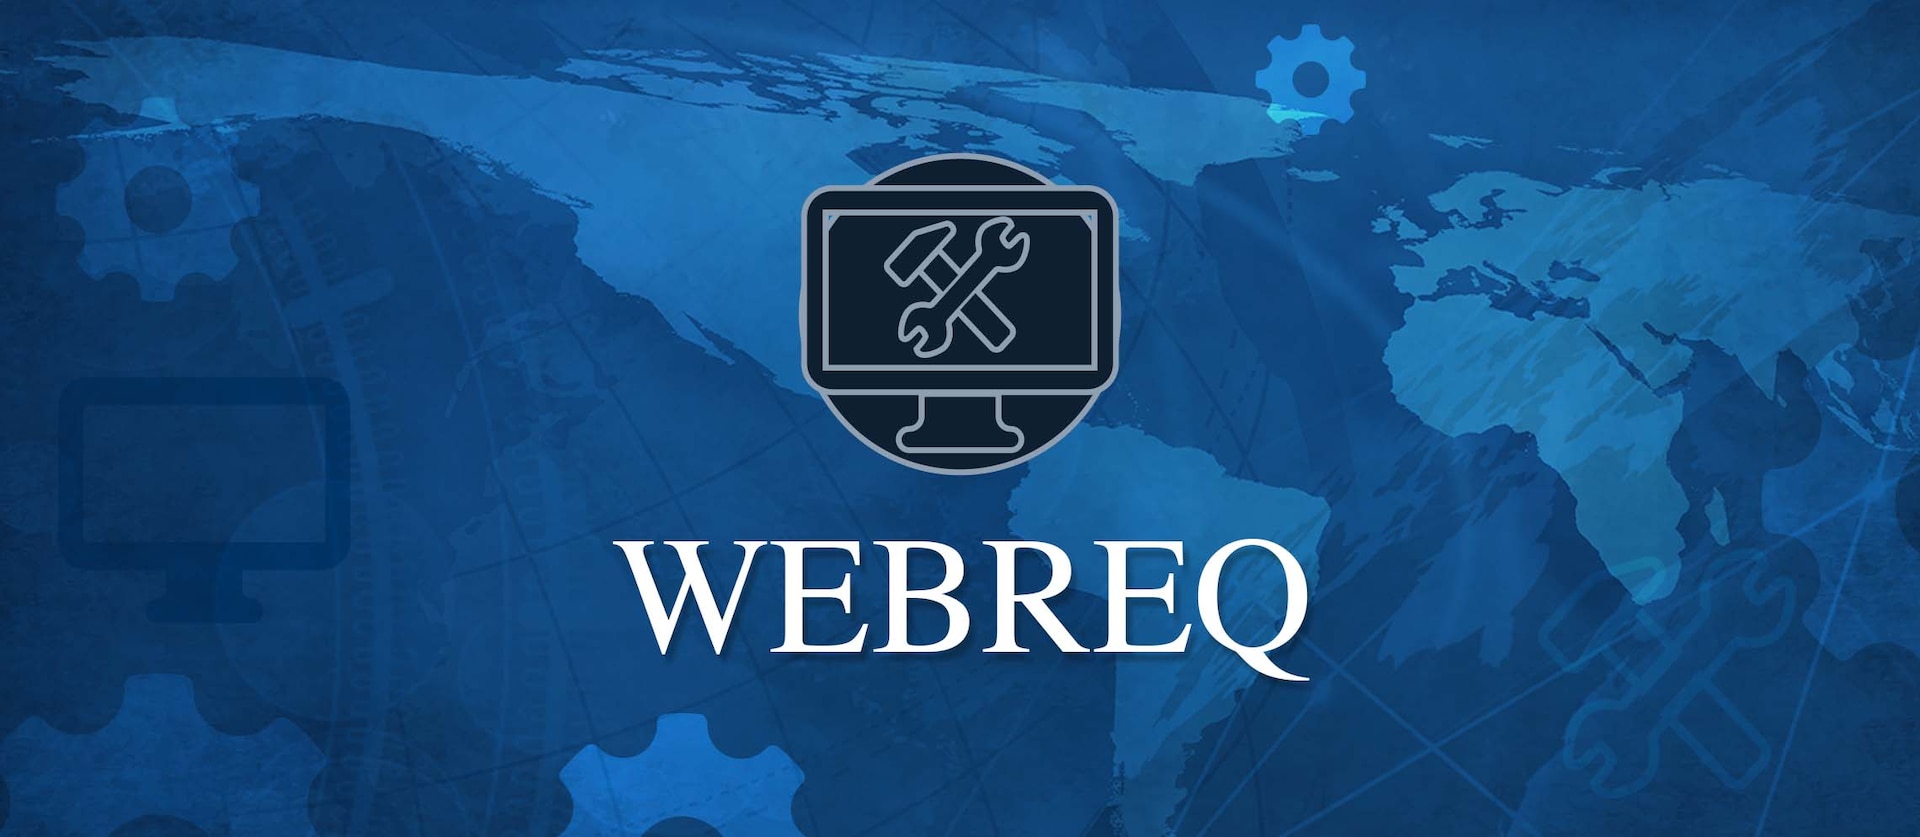 Banner for WEBREQ application